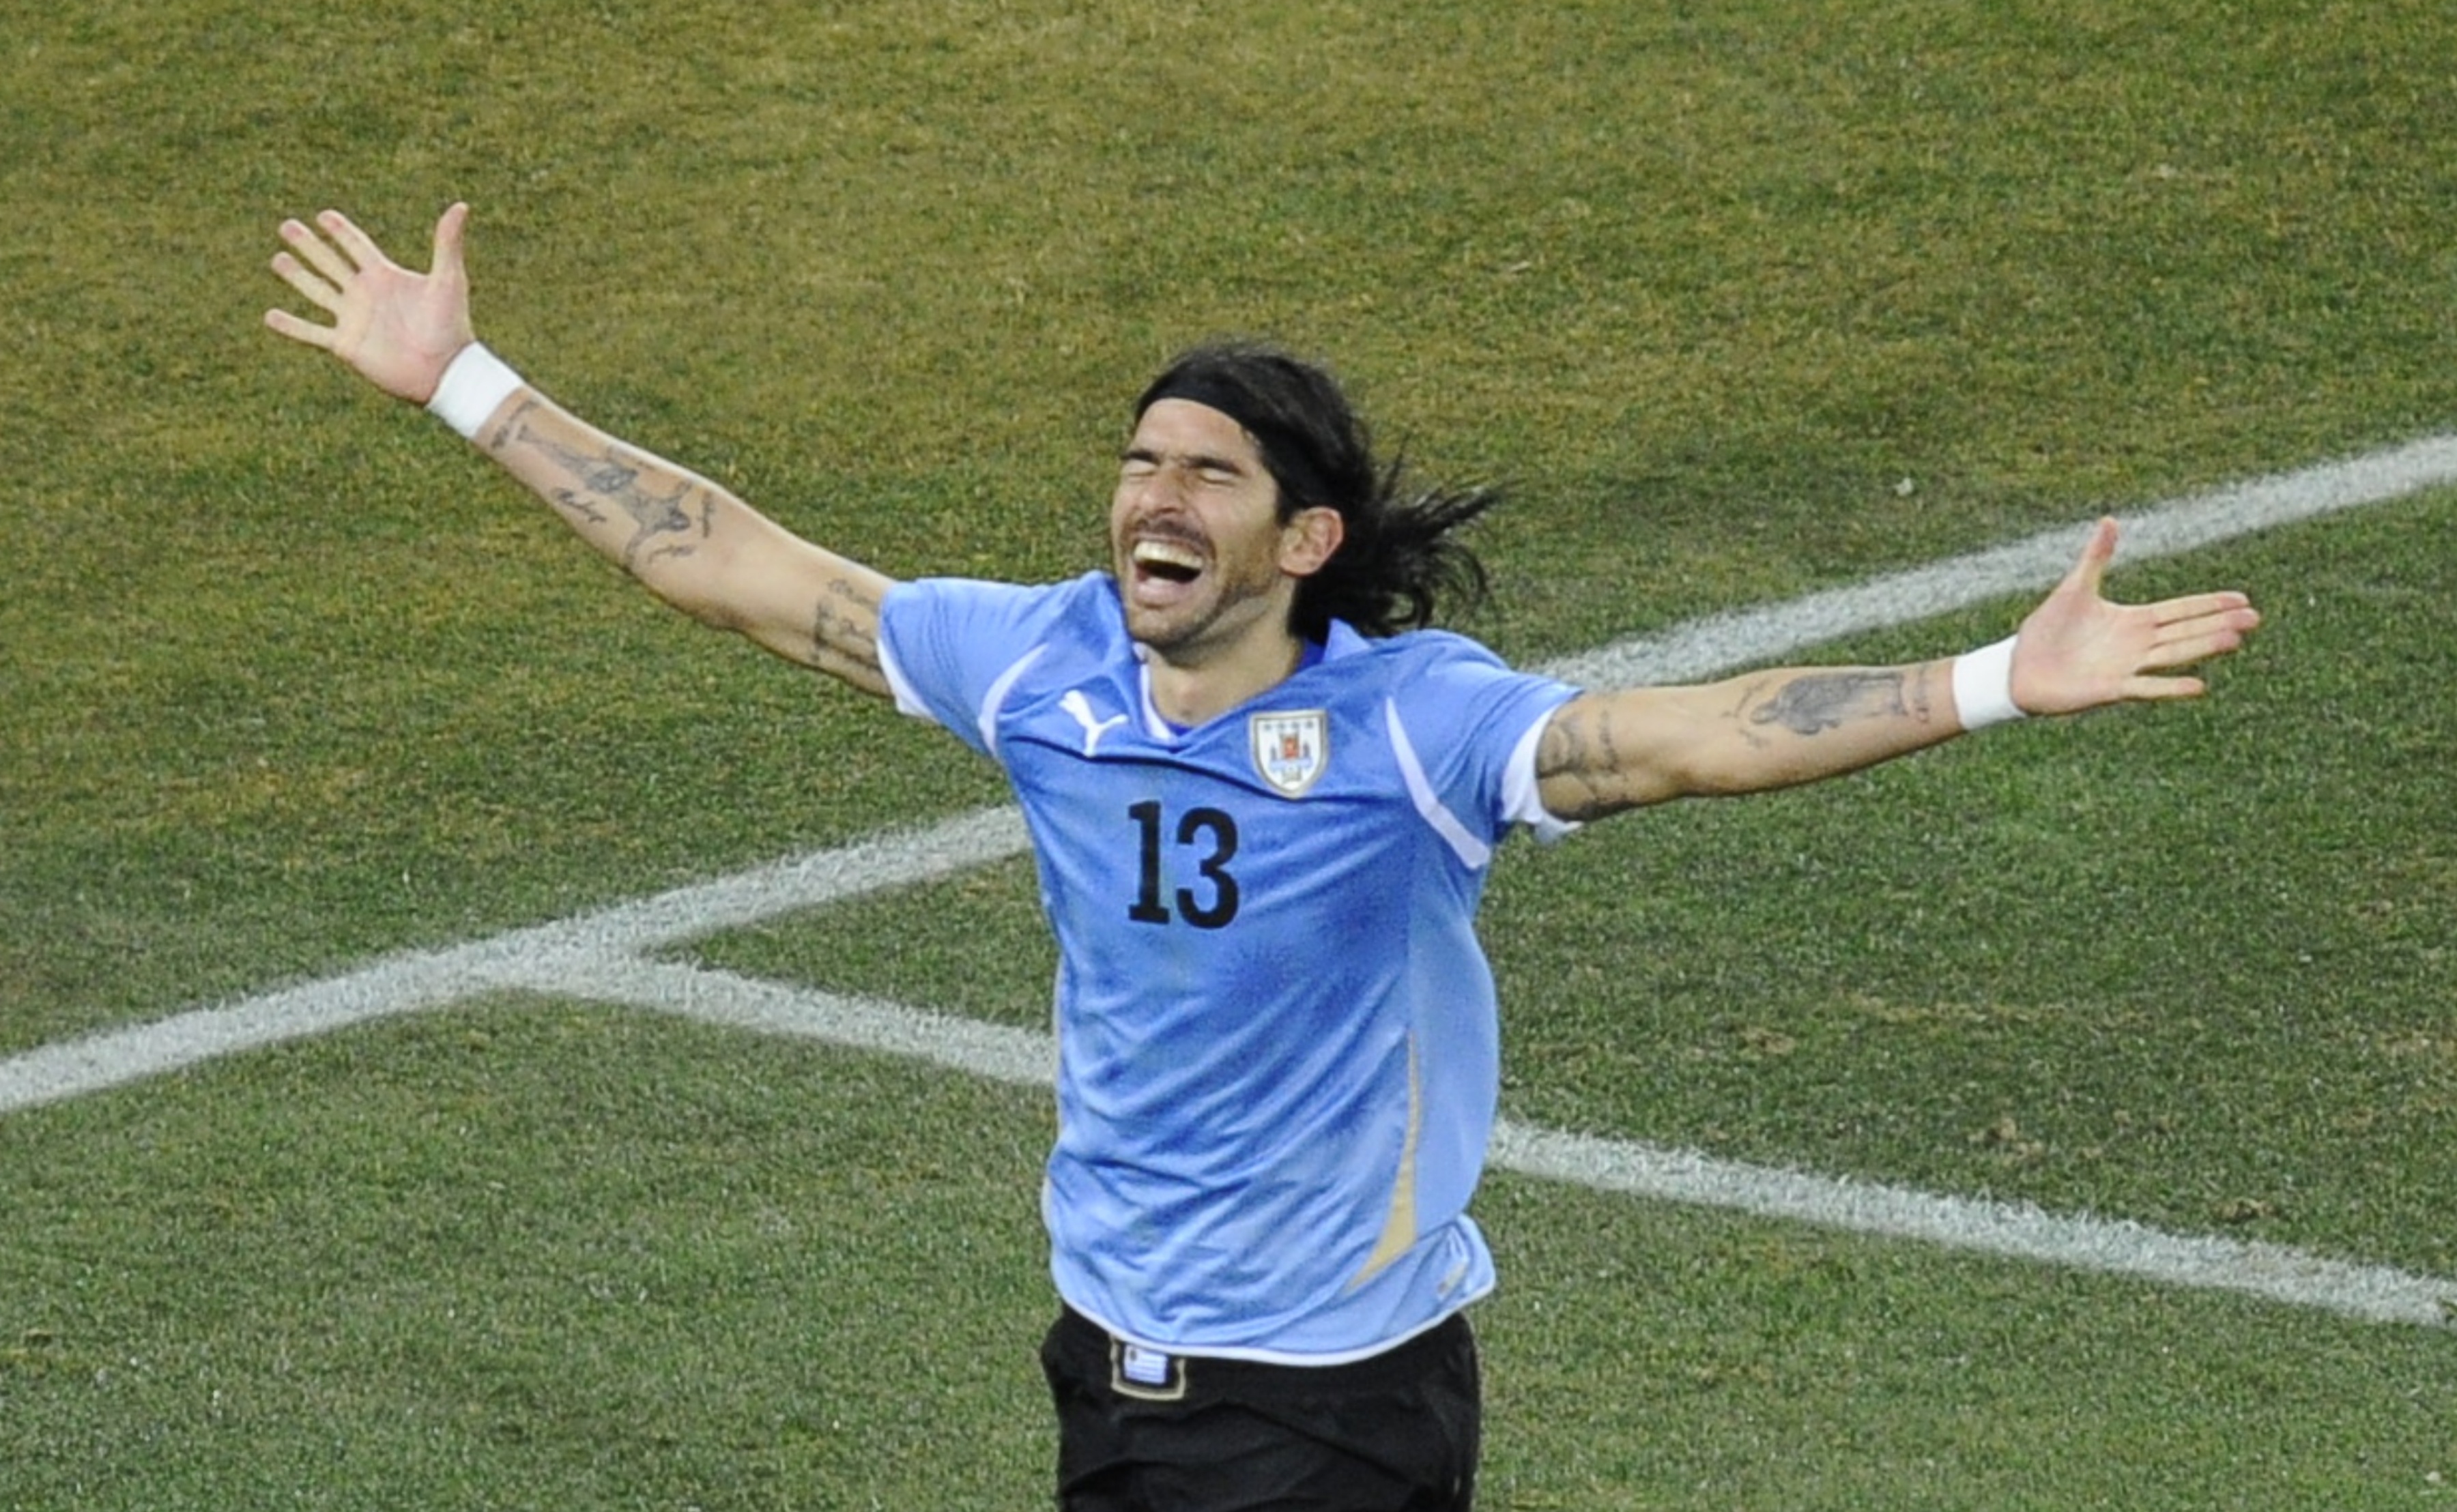 Selección: FIFA impedirá a Uruguay lucir cuatro estrellas sobre el escudo  de AUF - Diario Cambio Salto : Diario Cambio Salto